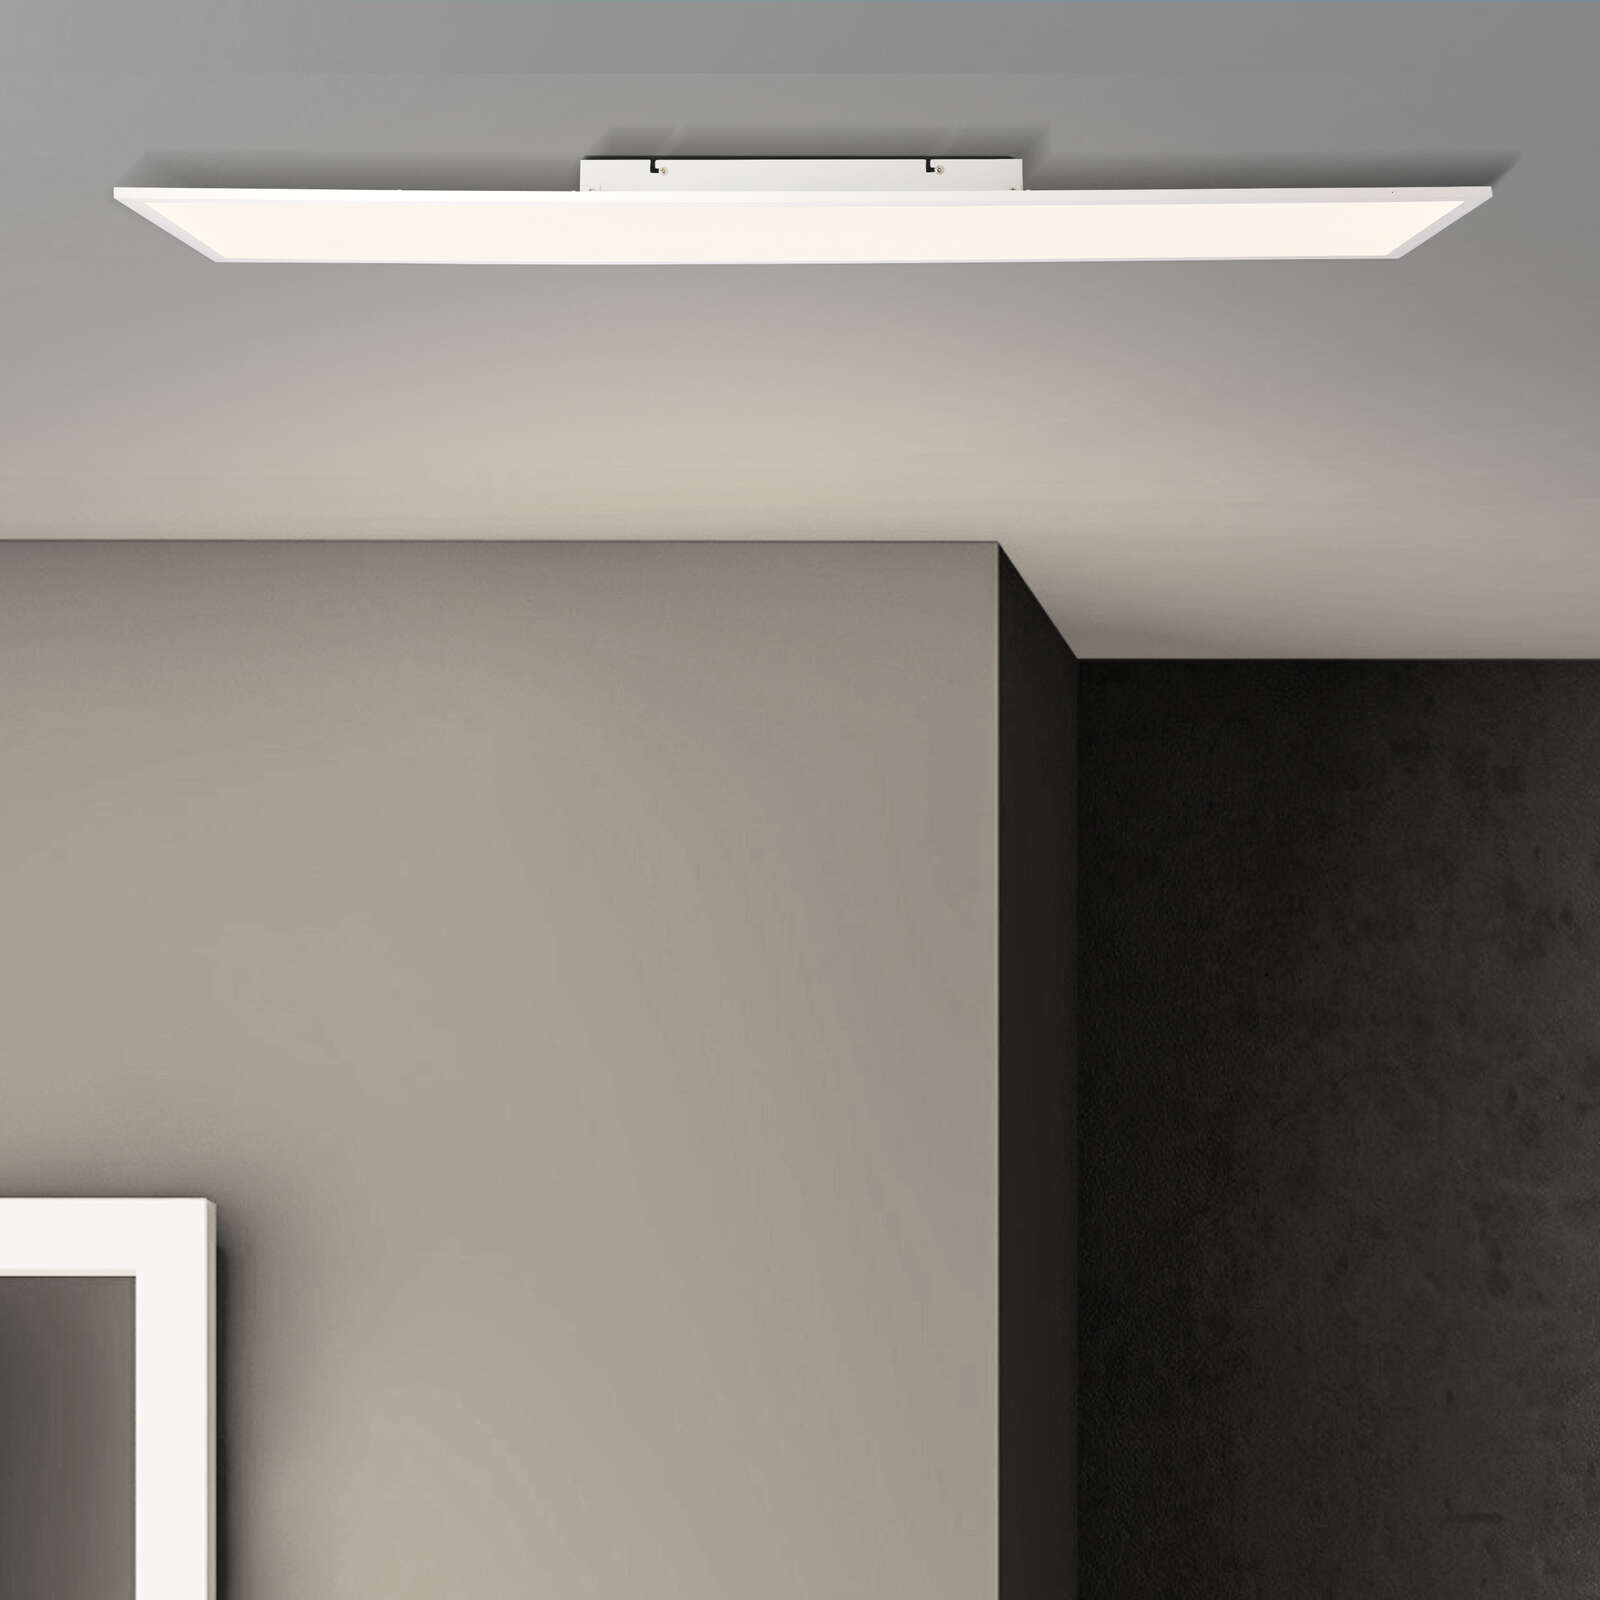             Kunststof plafondlamp - Constantin 11 - Wit
        